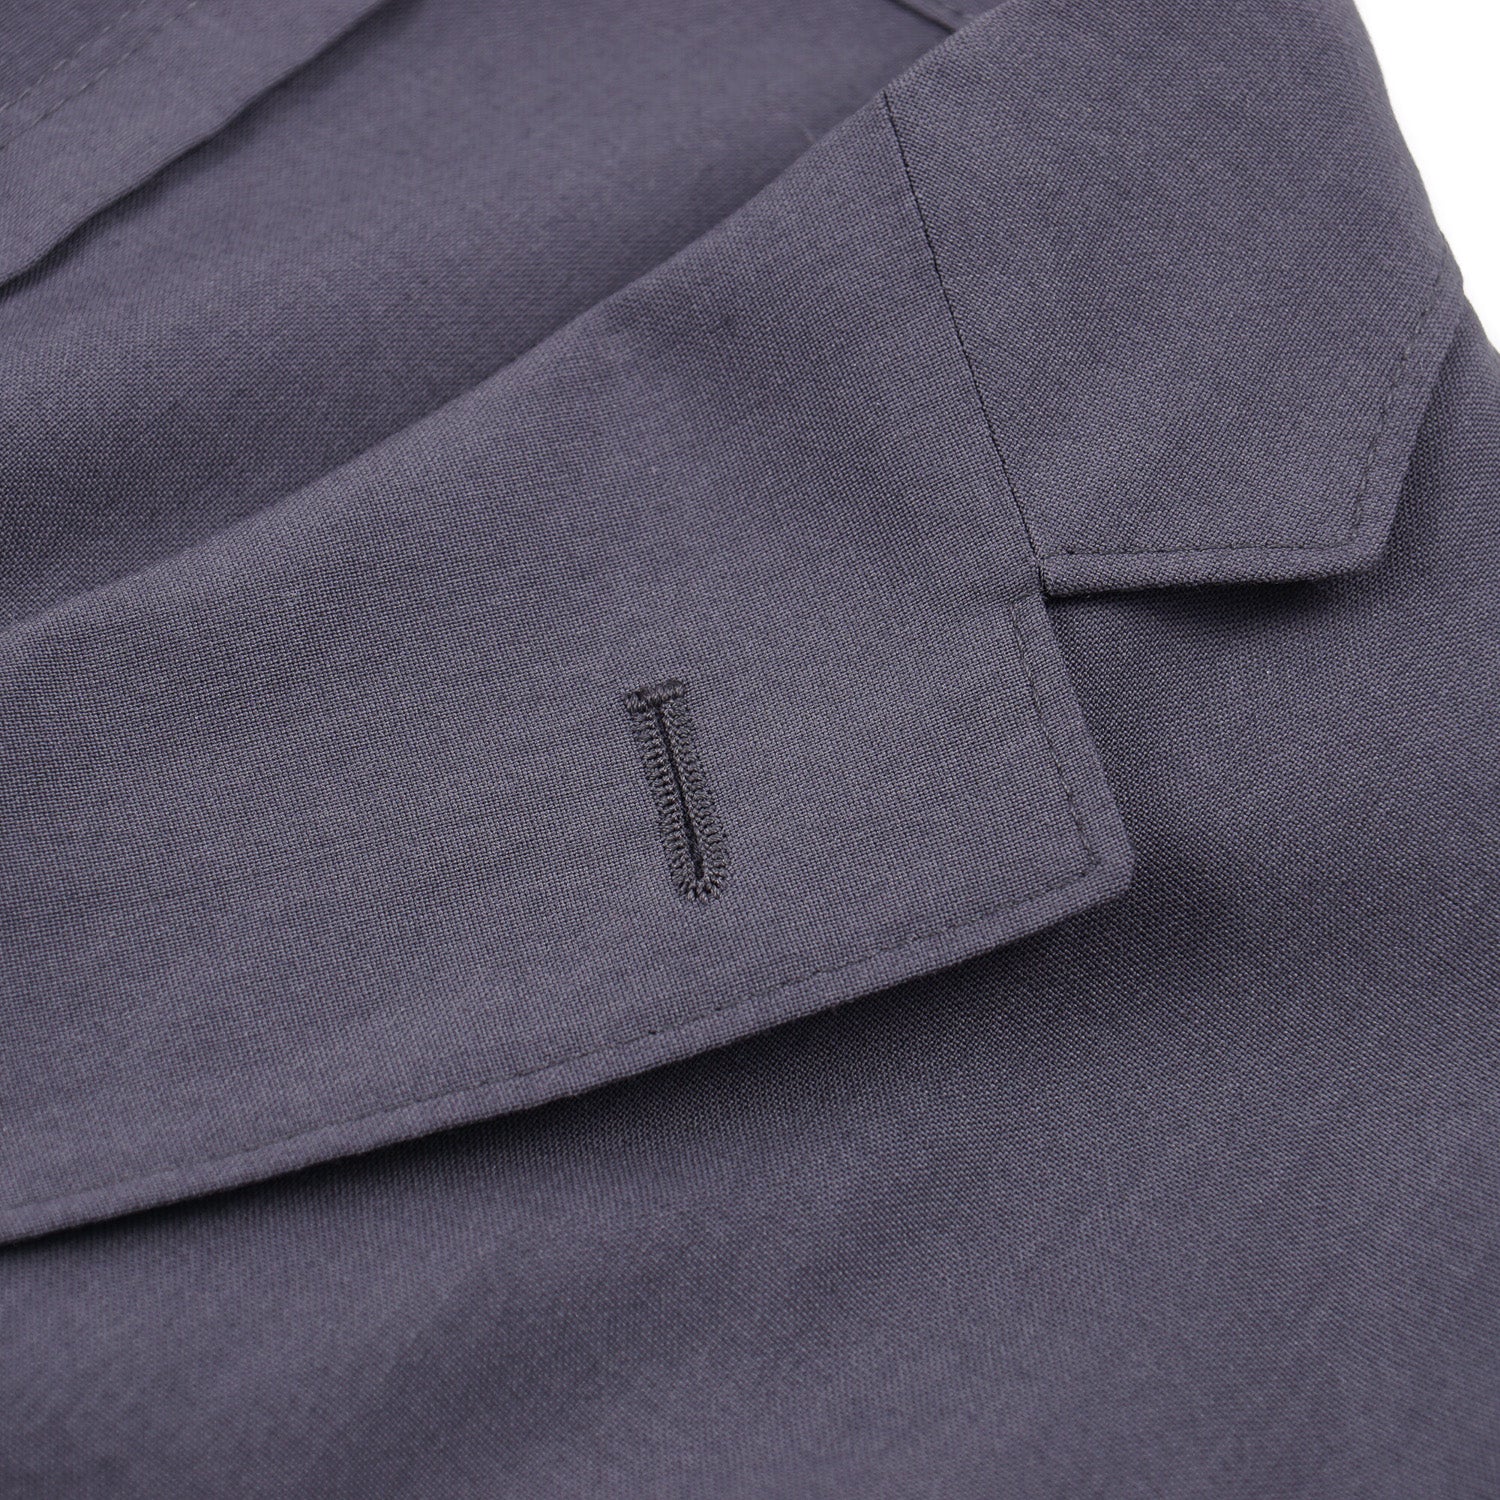 Boglioli Lightweight Wool 'K Travel' Suit - Top Shelf Apparel